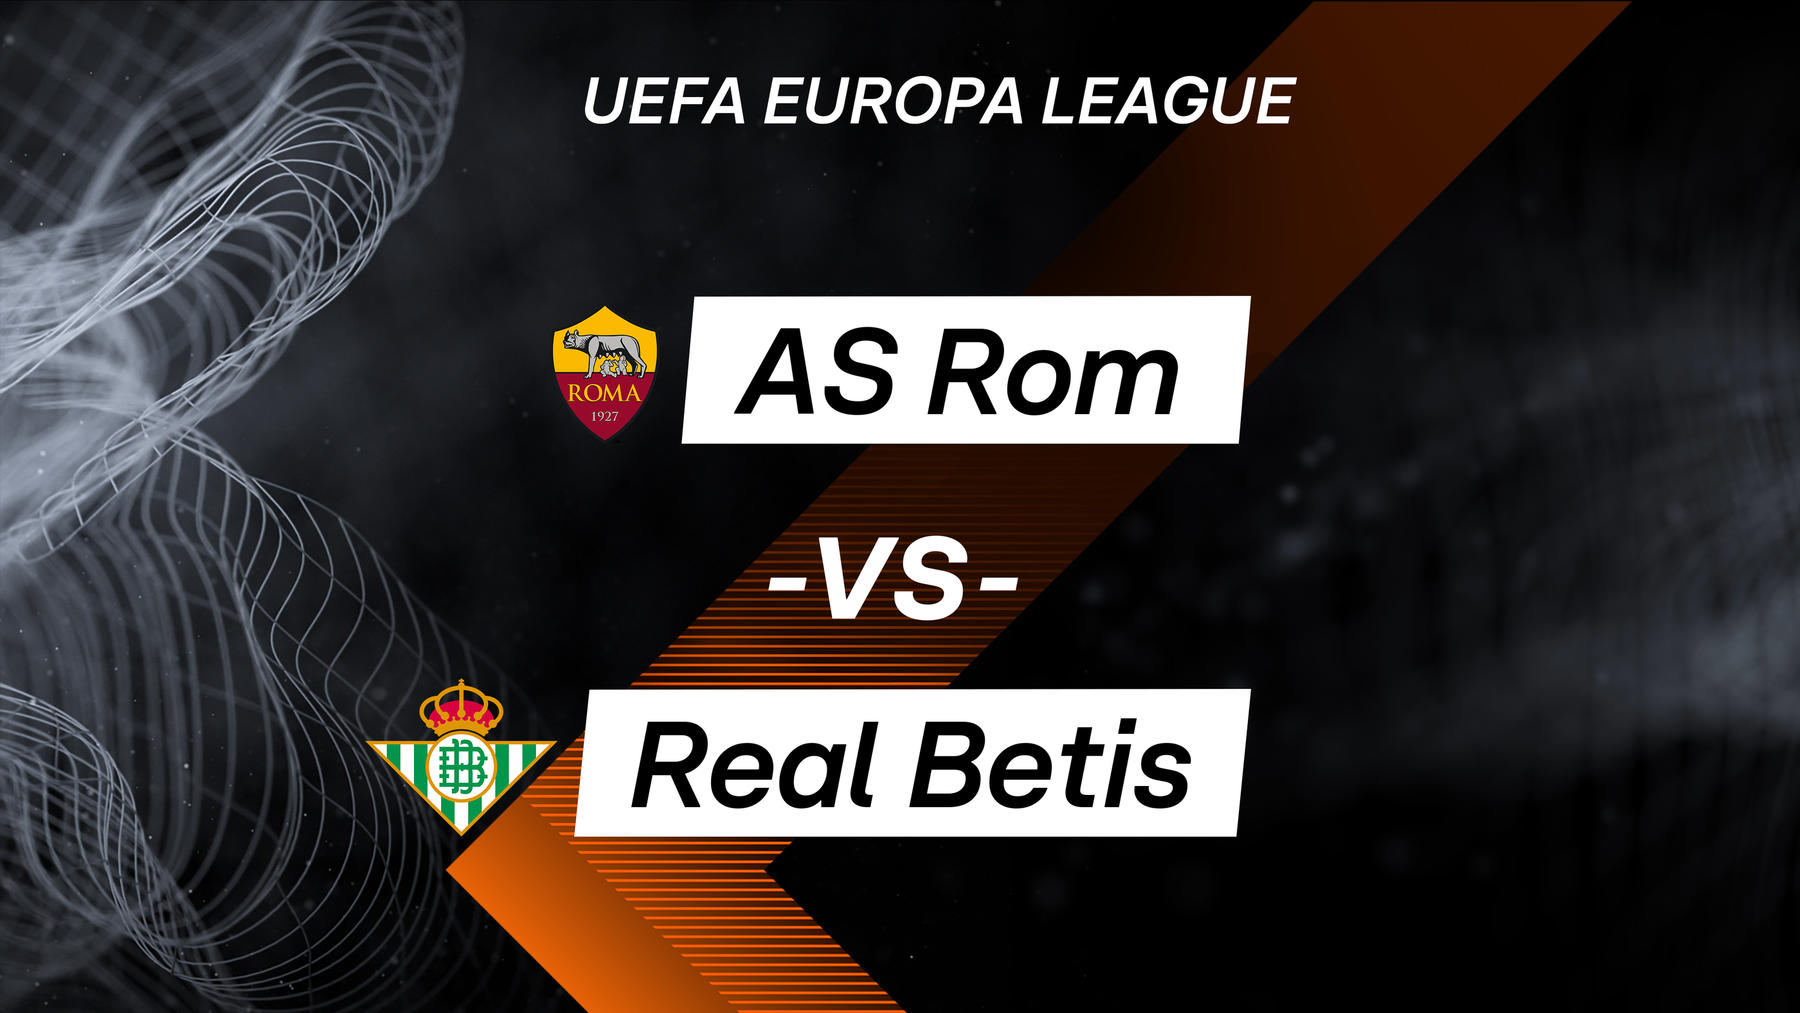 AS Rom vs. Real Betis